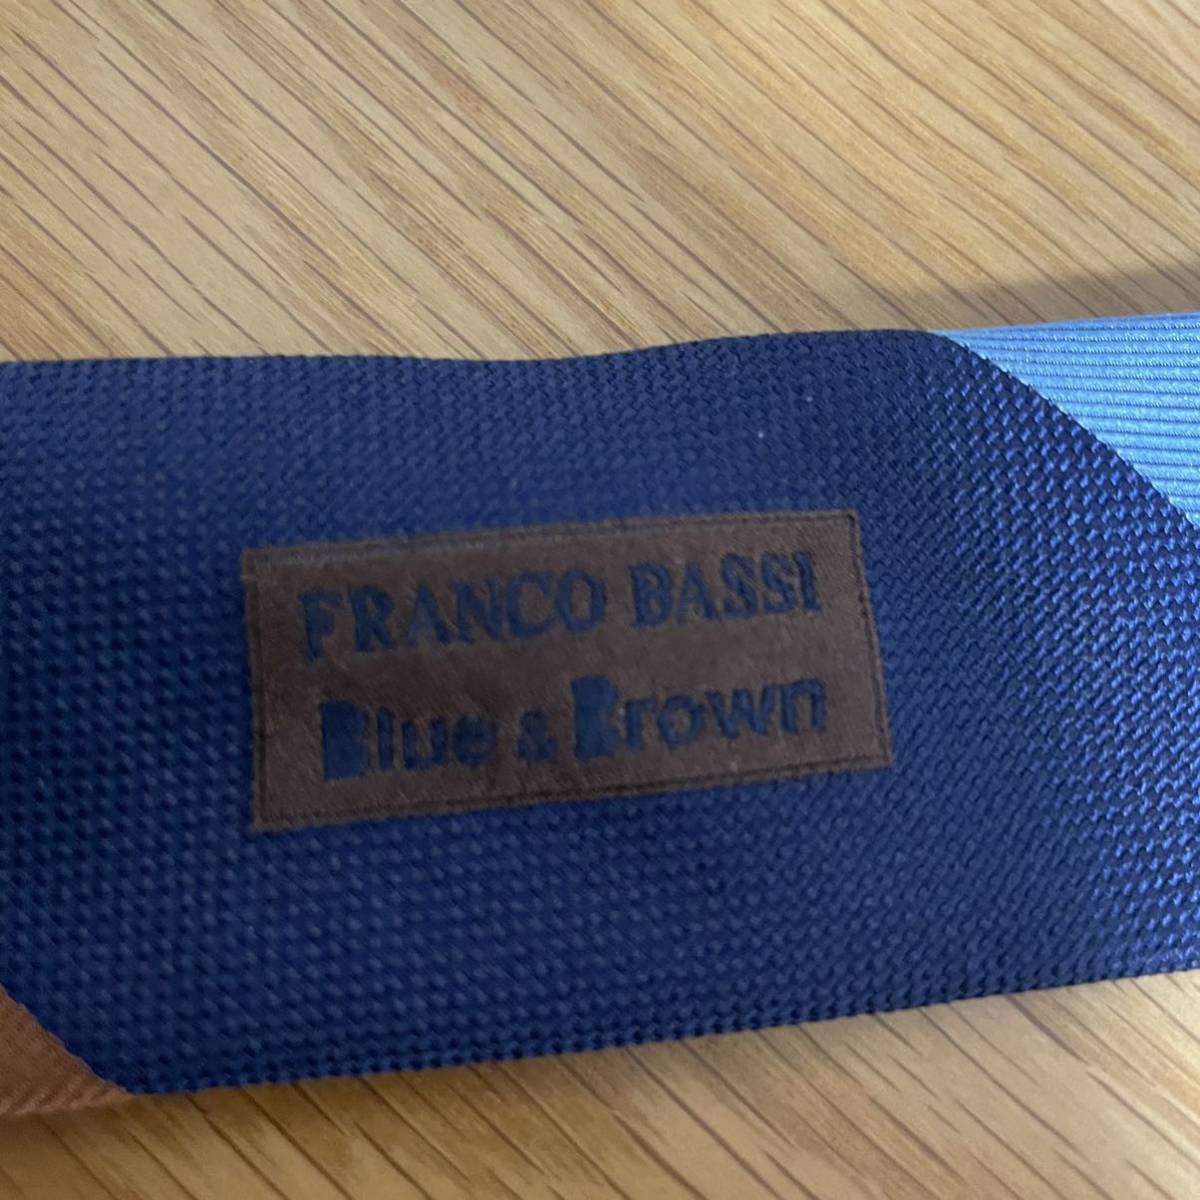 FRANCO BASSI for BEAMS F BLUE&BROWN 段落ち パネル ストライプ